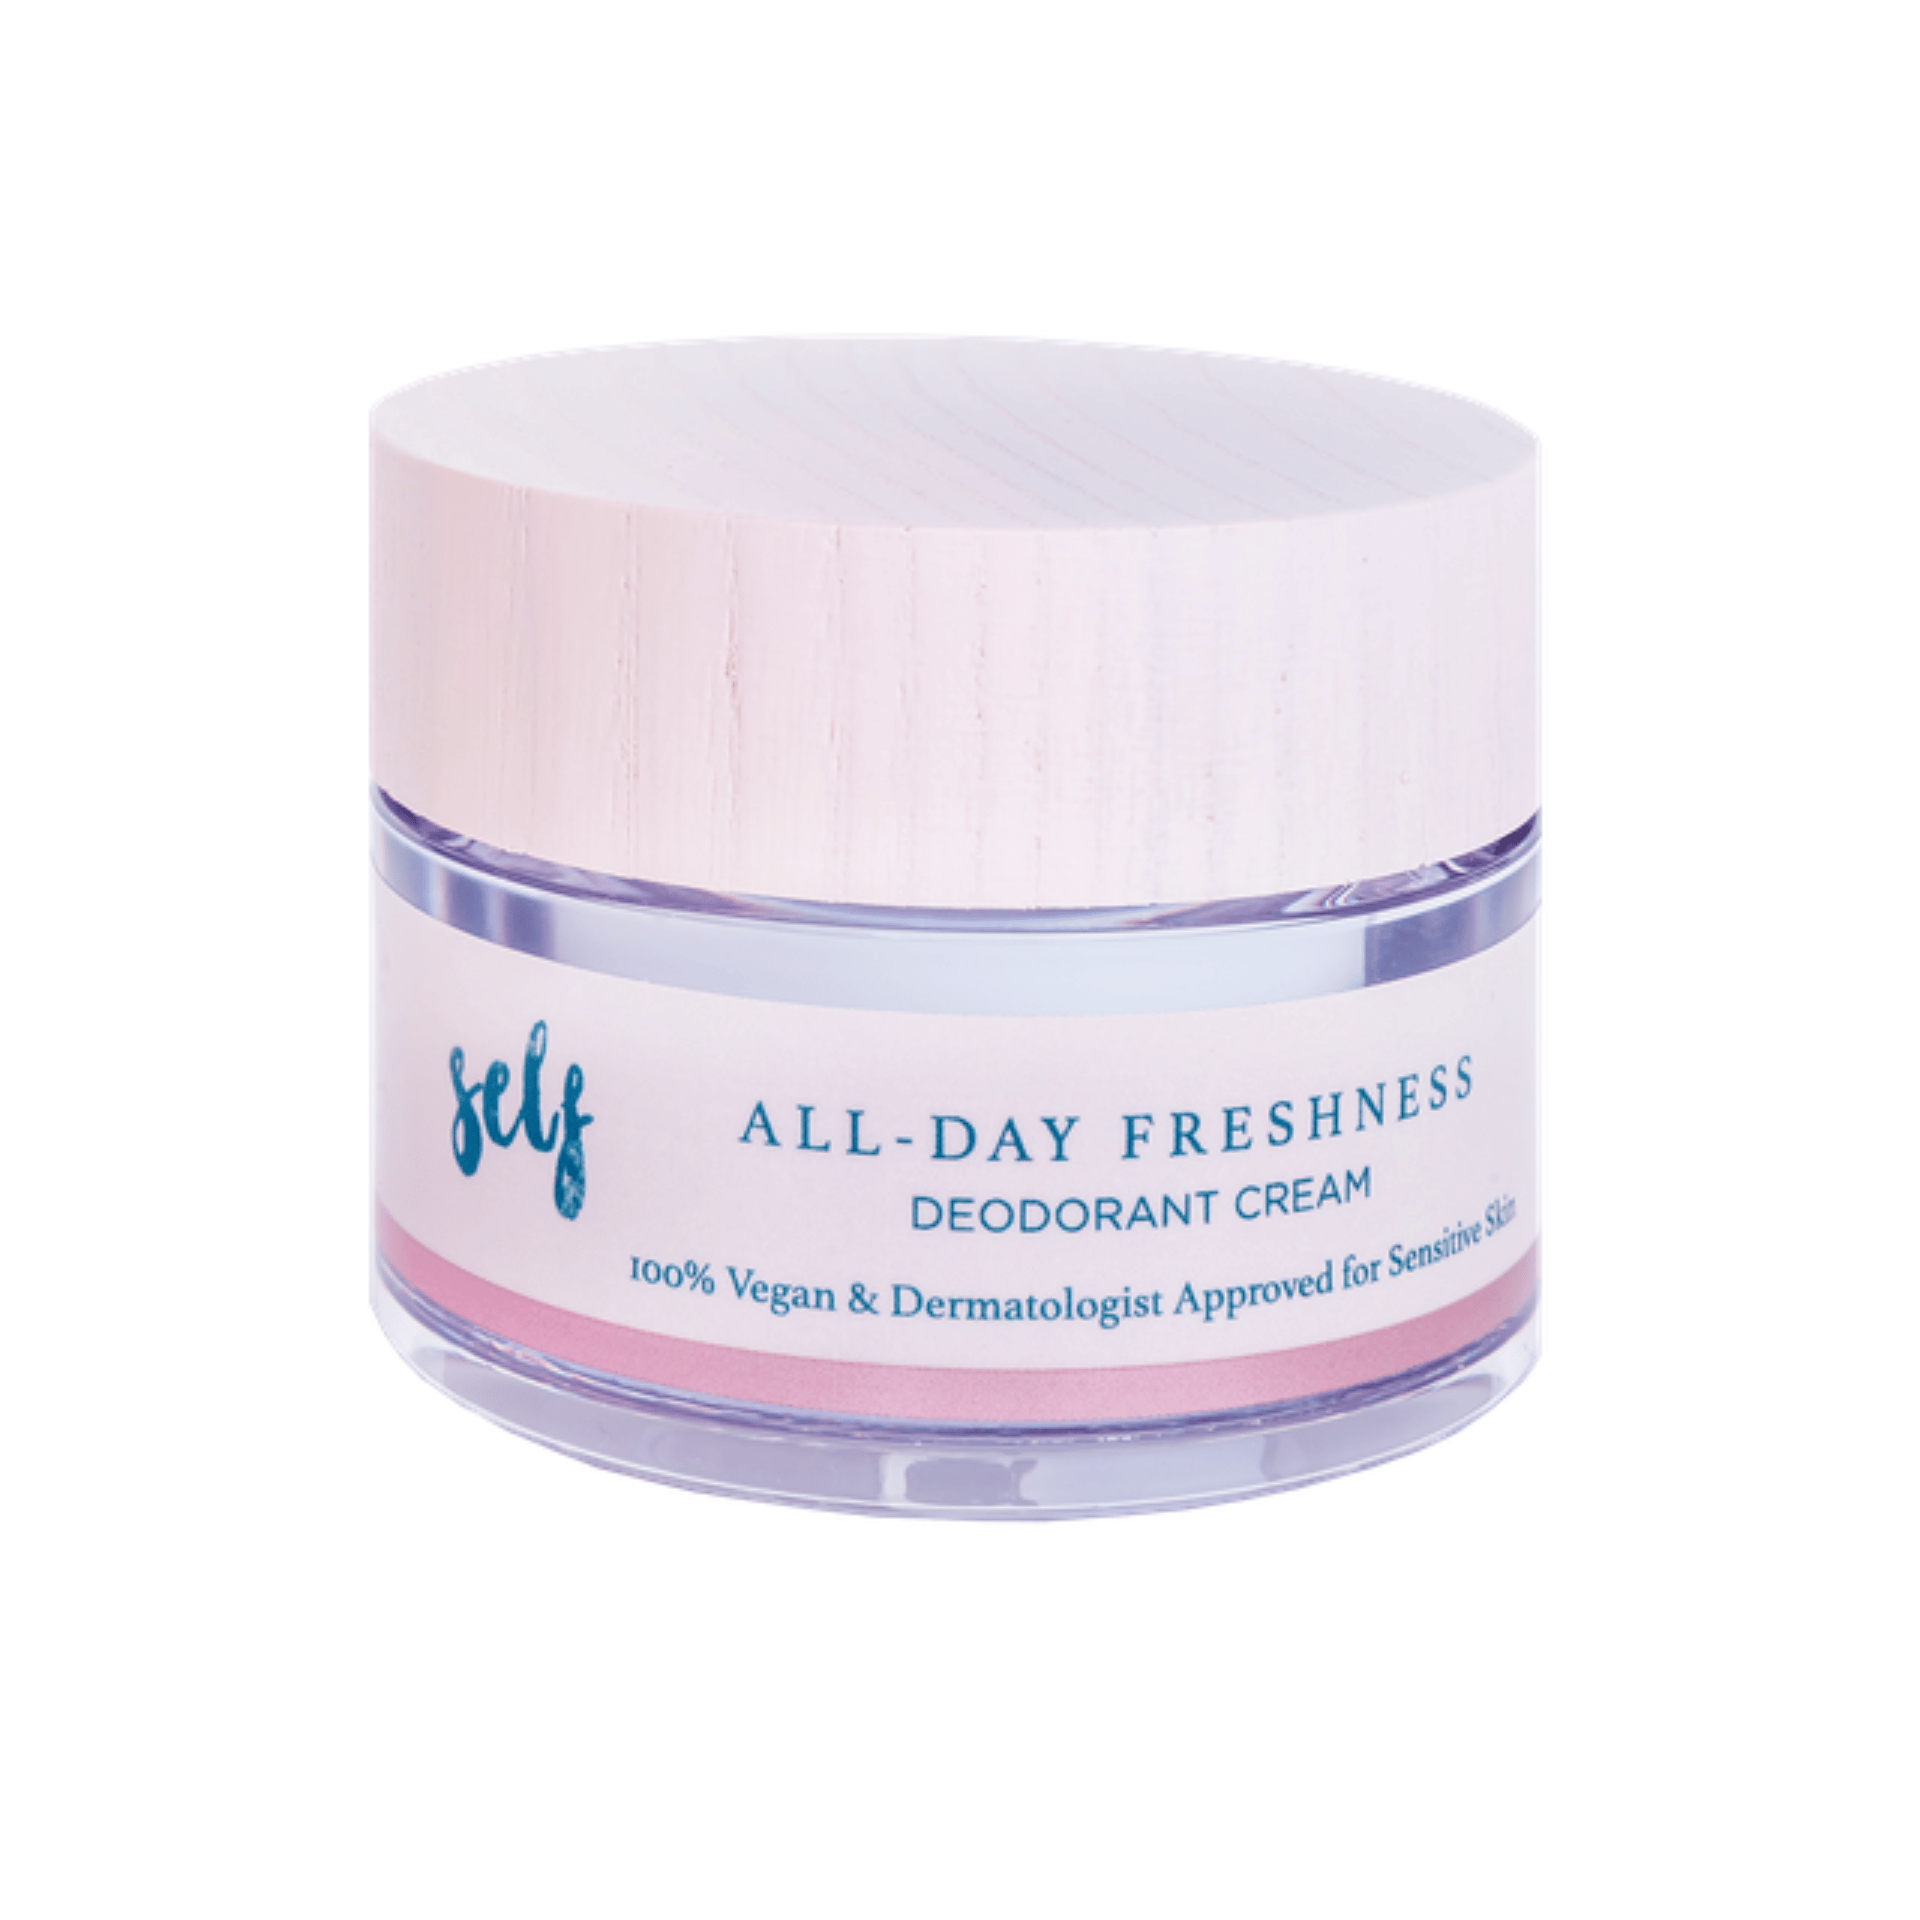 Self All-day Freshness Deodorant Cream 50ml